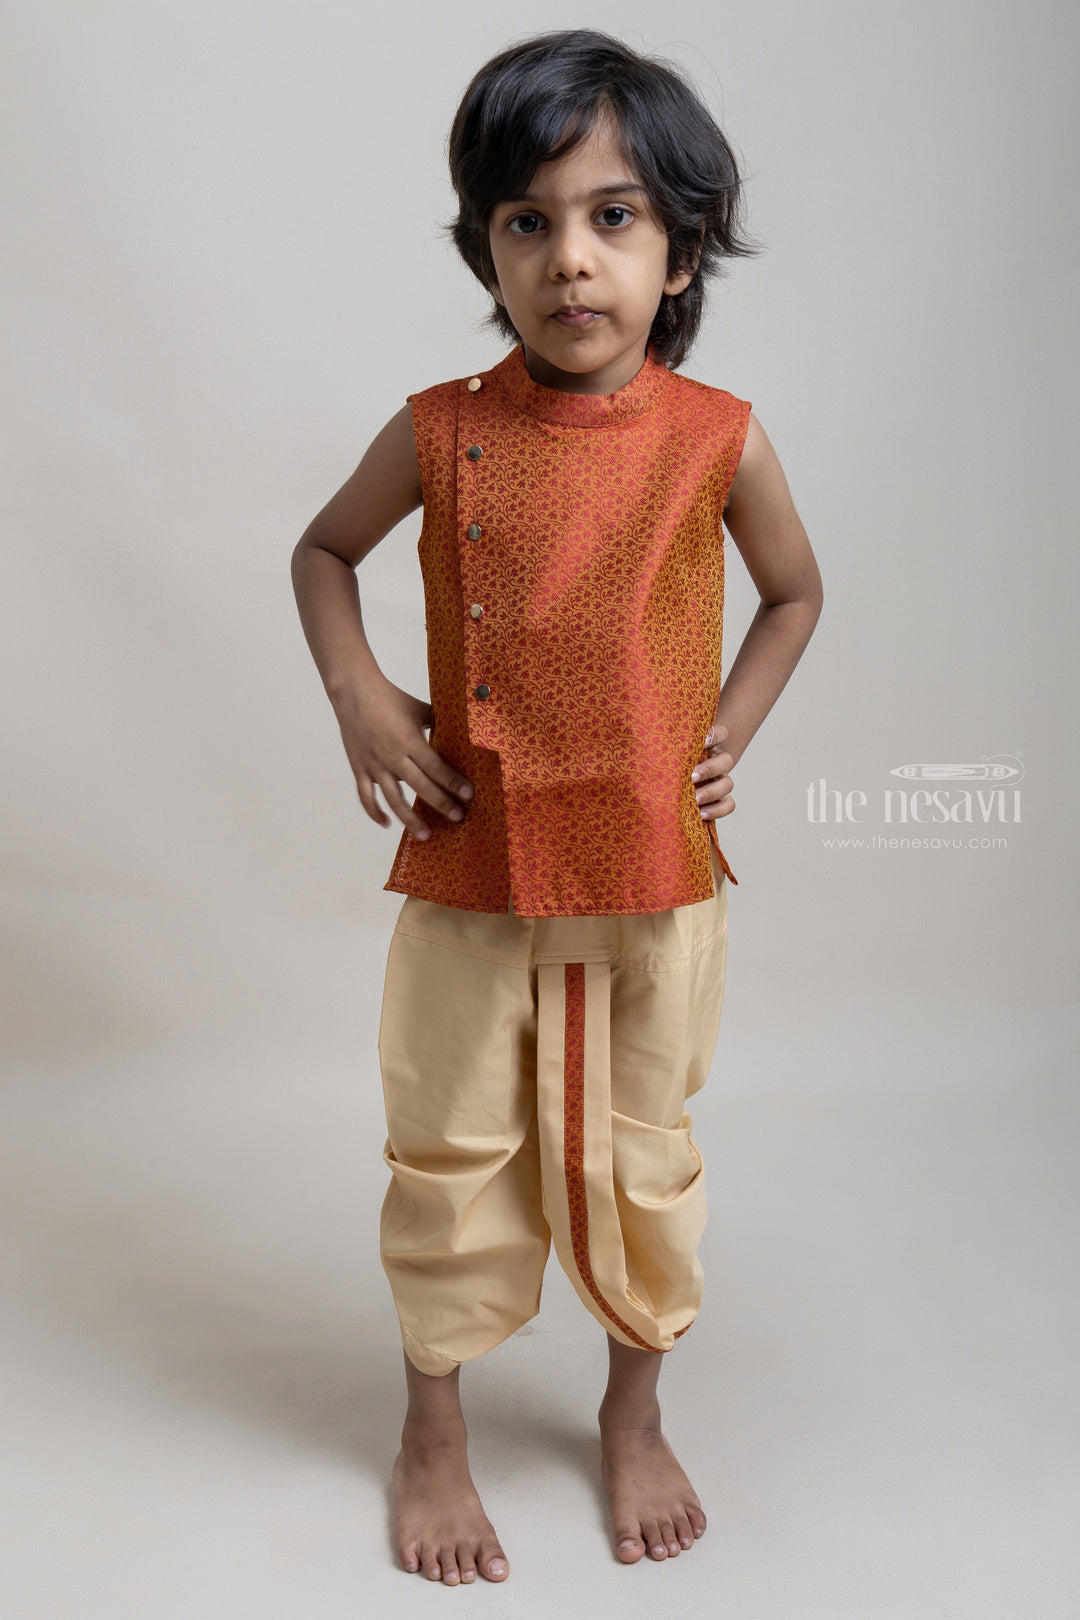 The Nesavu Boys Dothi Set Premium Floral Designer Orange Ethnic kurta With Contrast Dhoti For Boys Nesavu 12 (3M) / Orange / Dupioni Silk BES294B-12 Trendy Premium Wear For Boys | Ethnic Wear Collection | The Nesavu